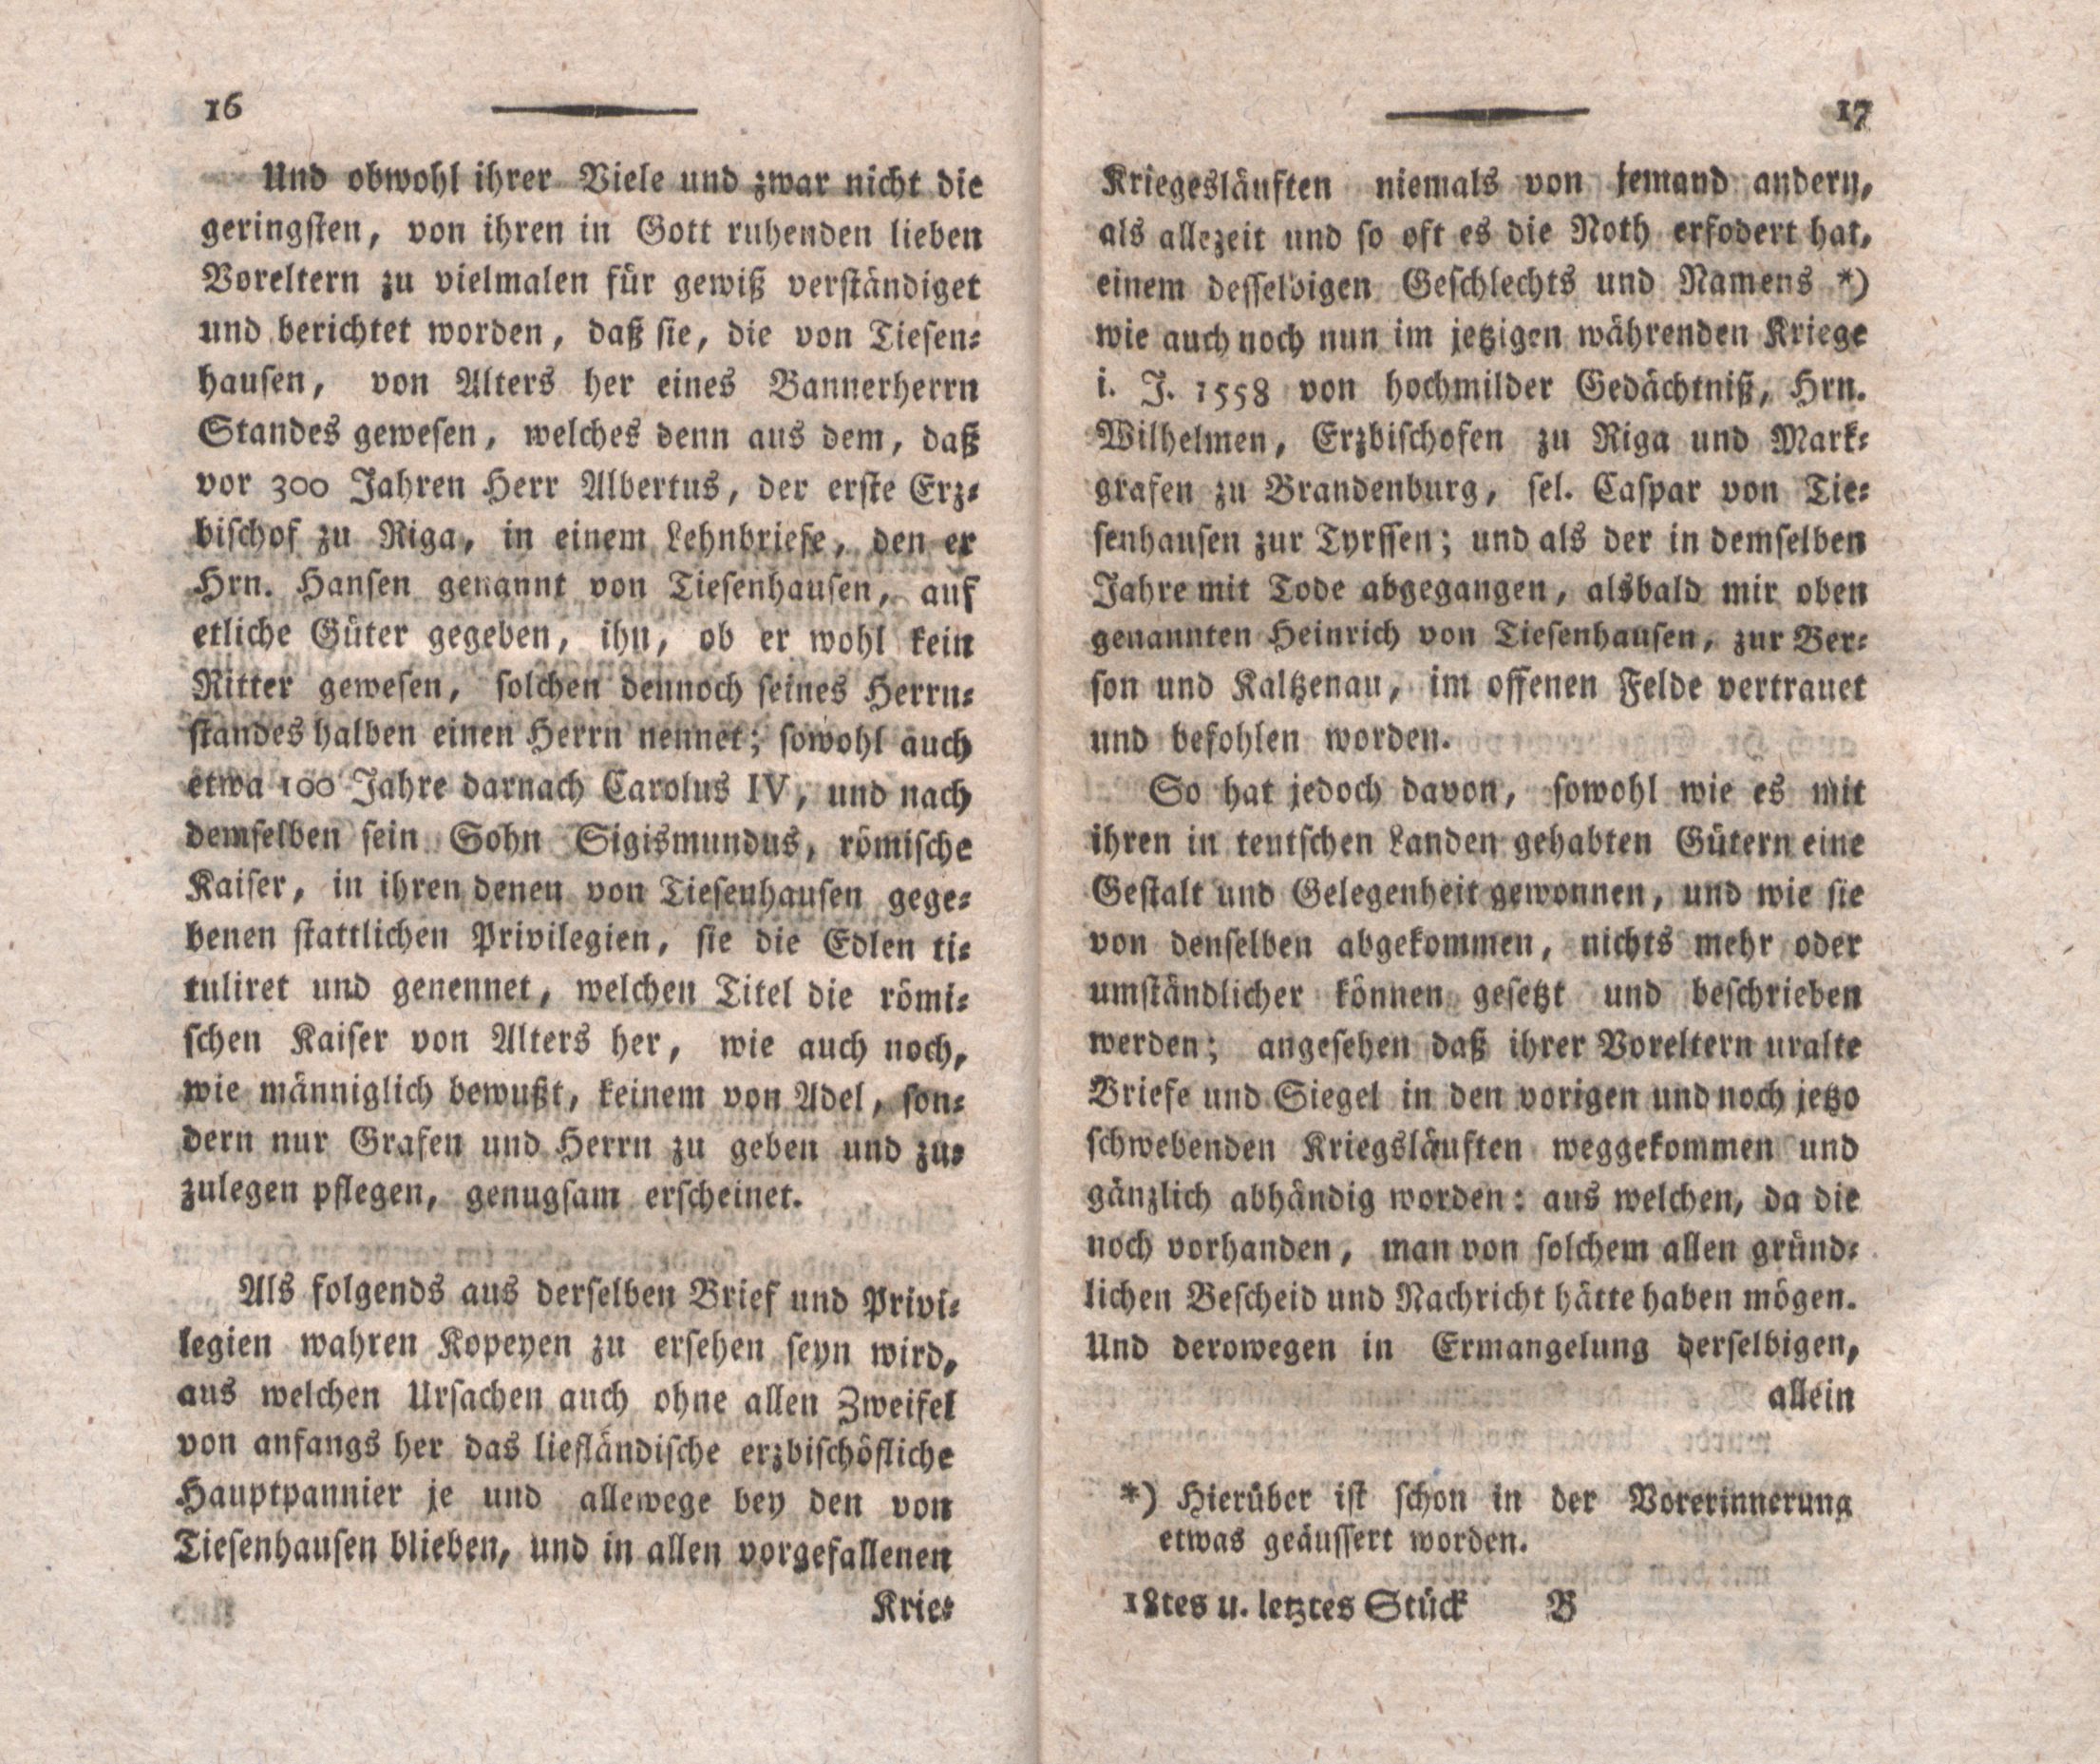 Neue nordische Miscellaneen [18] (1798) | 10. (16-17) Main body of text